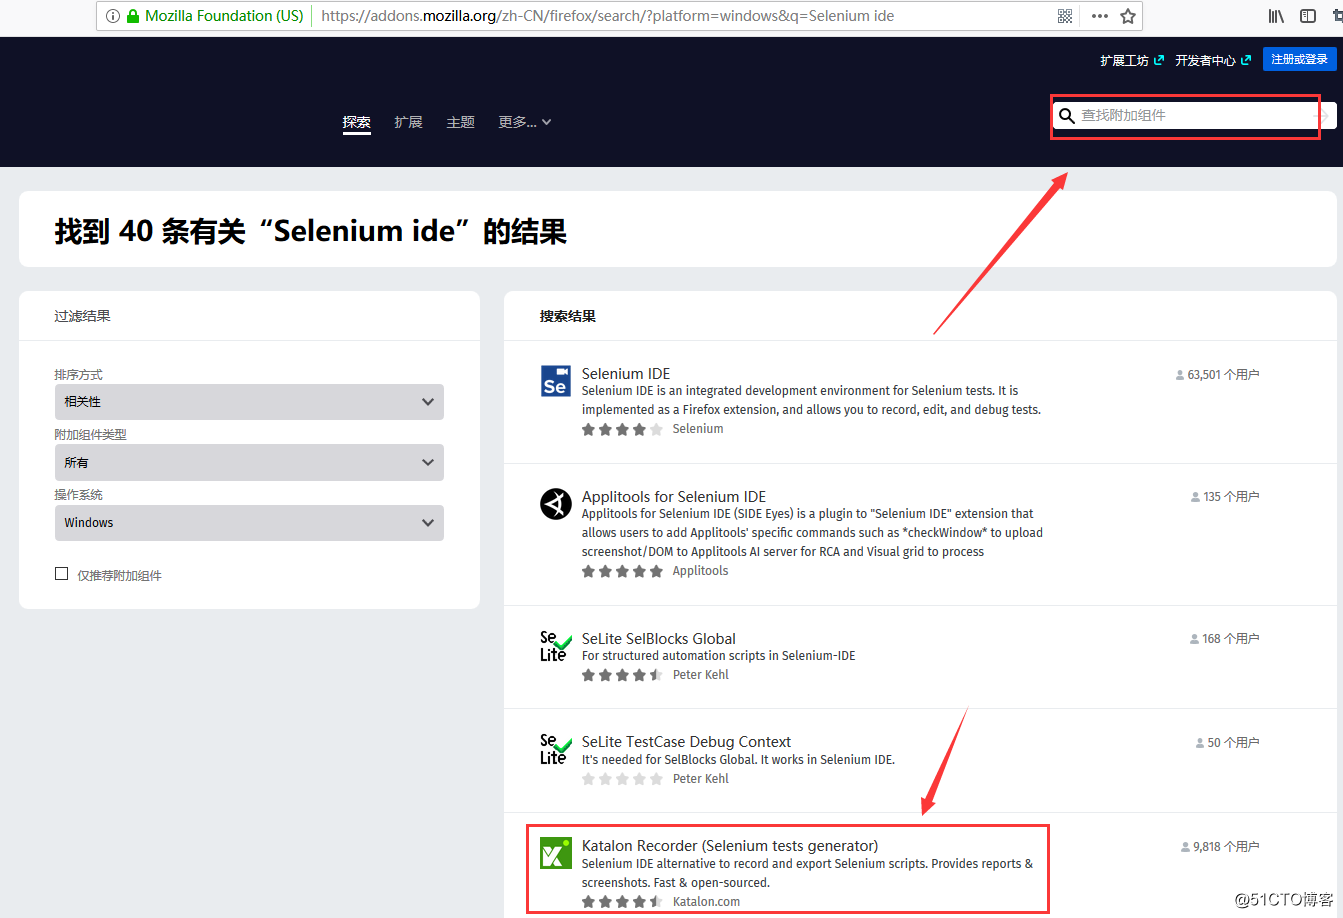 Selenium3自动化测试【10】Katalon Studio的认知